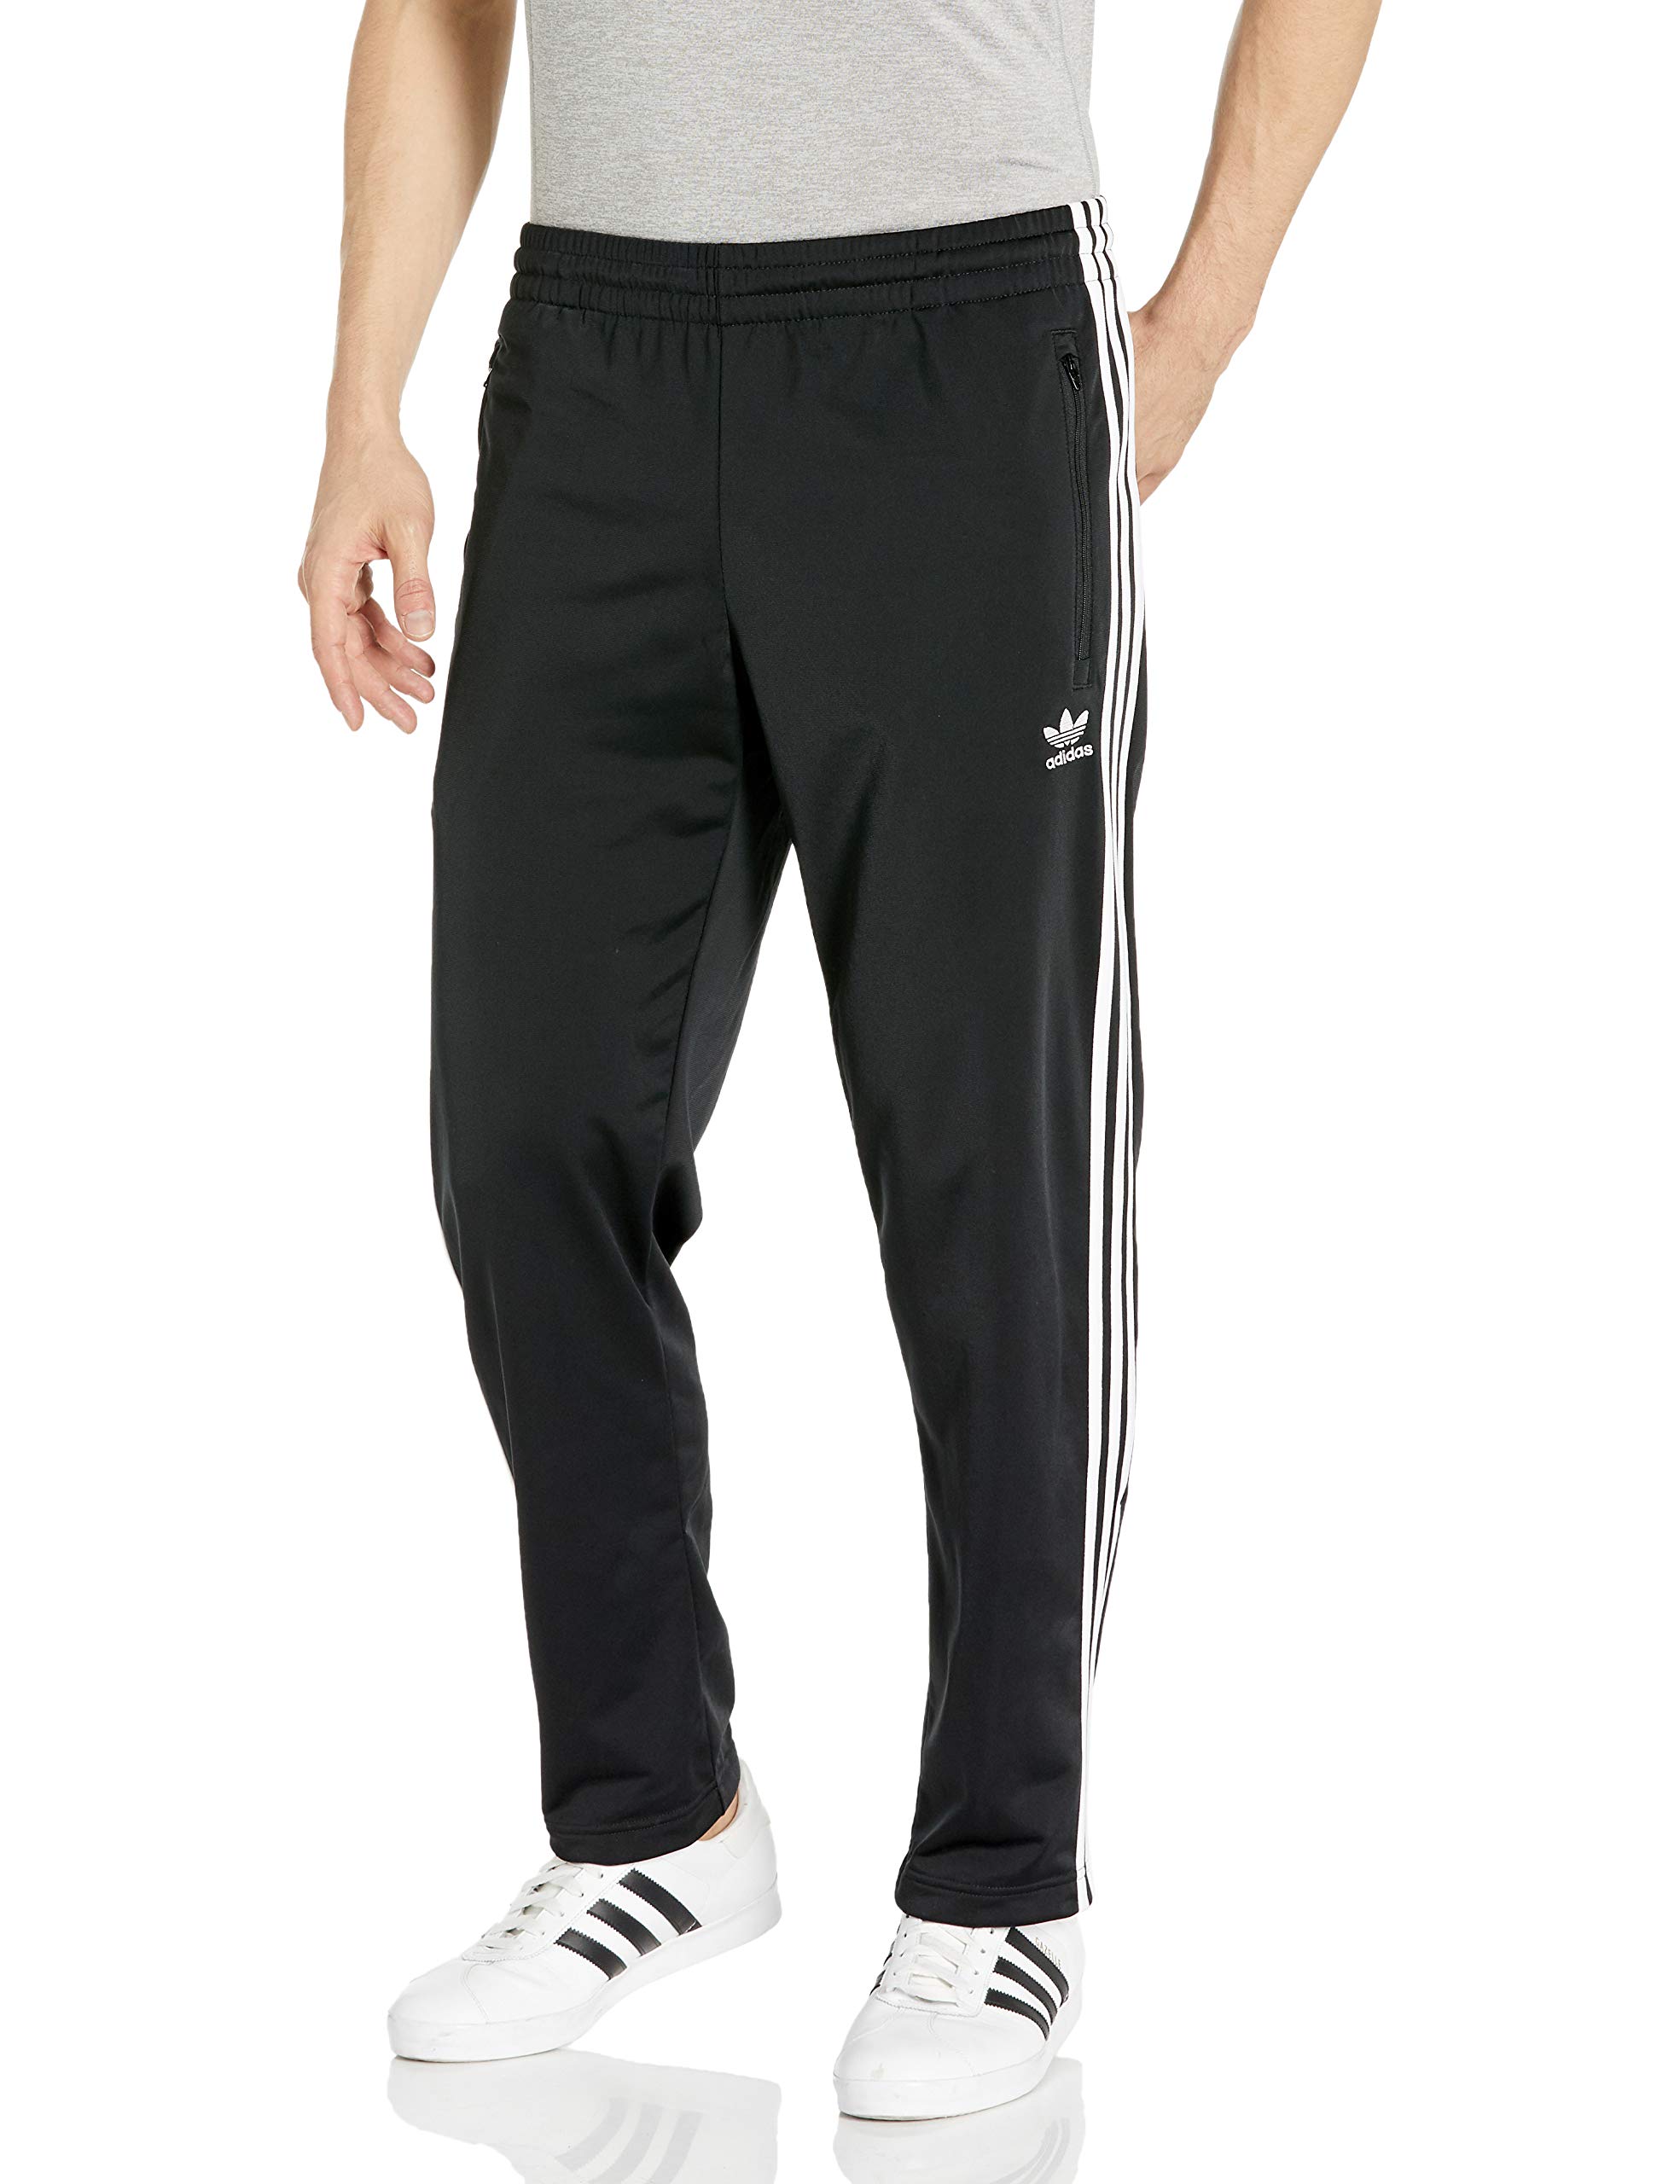 adidas Originals Men's Firebird Track Pants, black, M